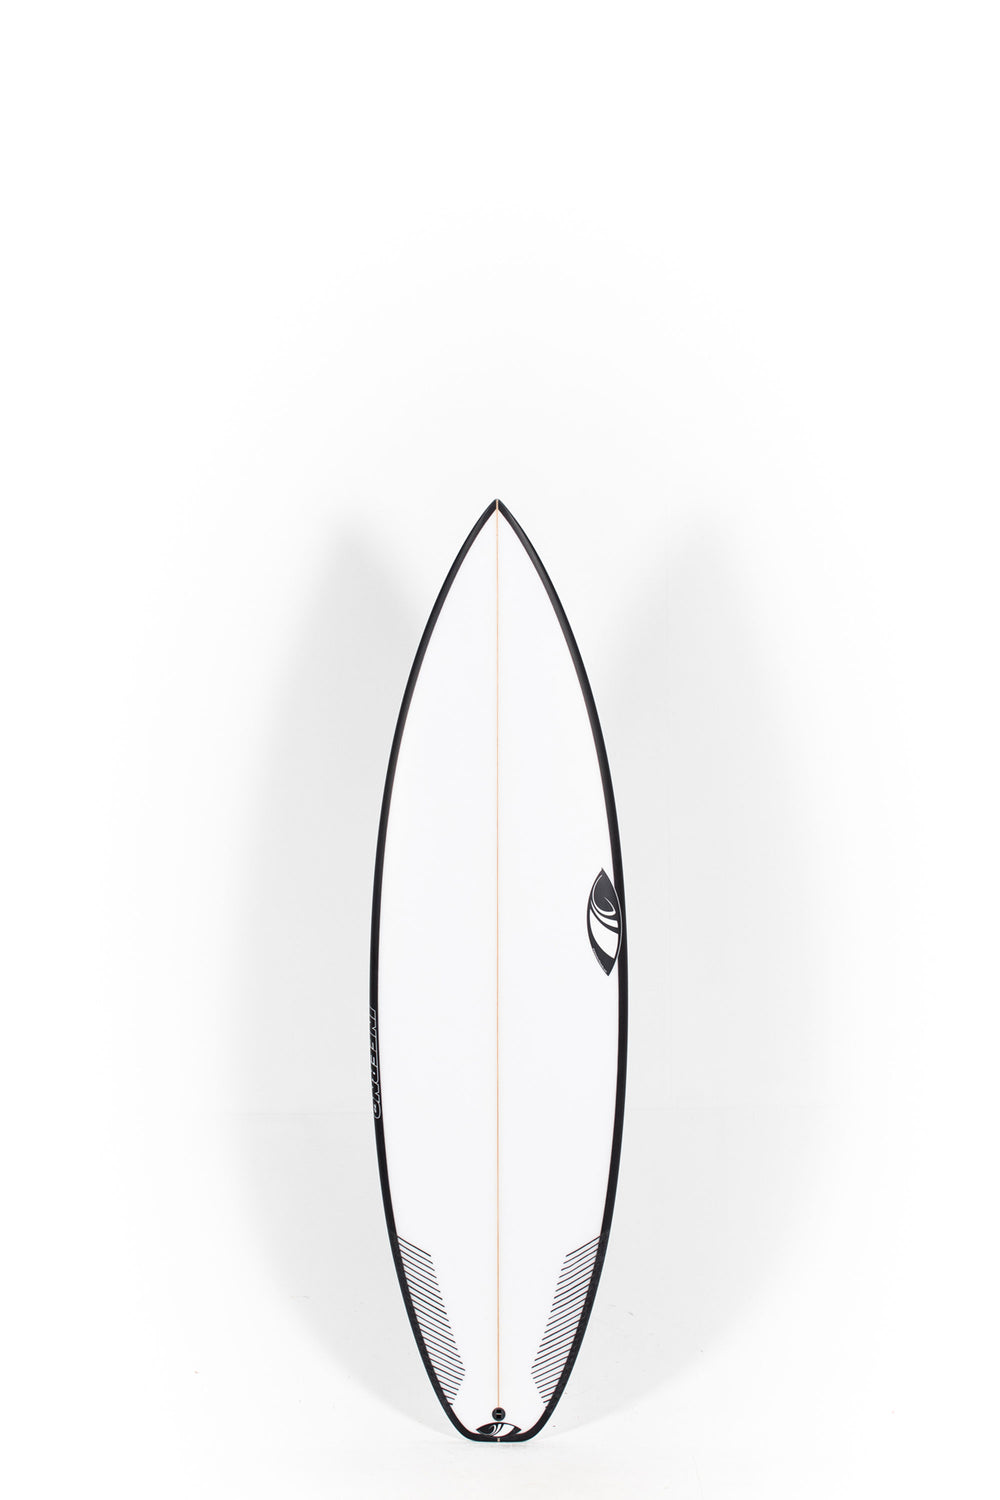 Pukas Surf Shop - Sharpeye Surfboards - INFERNO 72 by Marcio Zouvi -  5'11